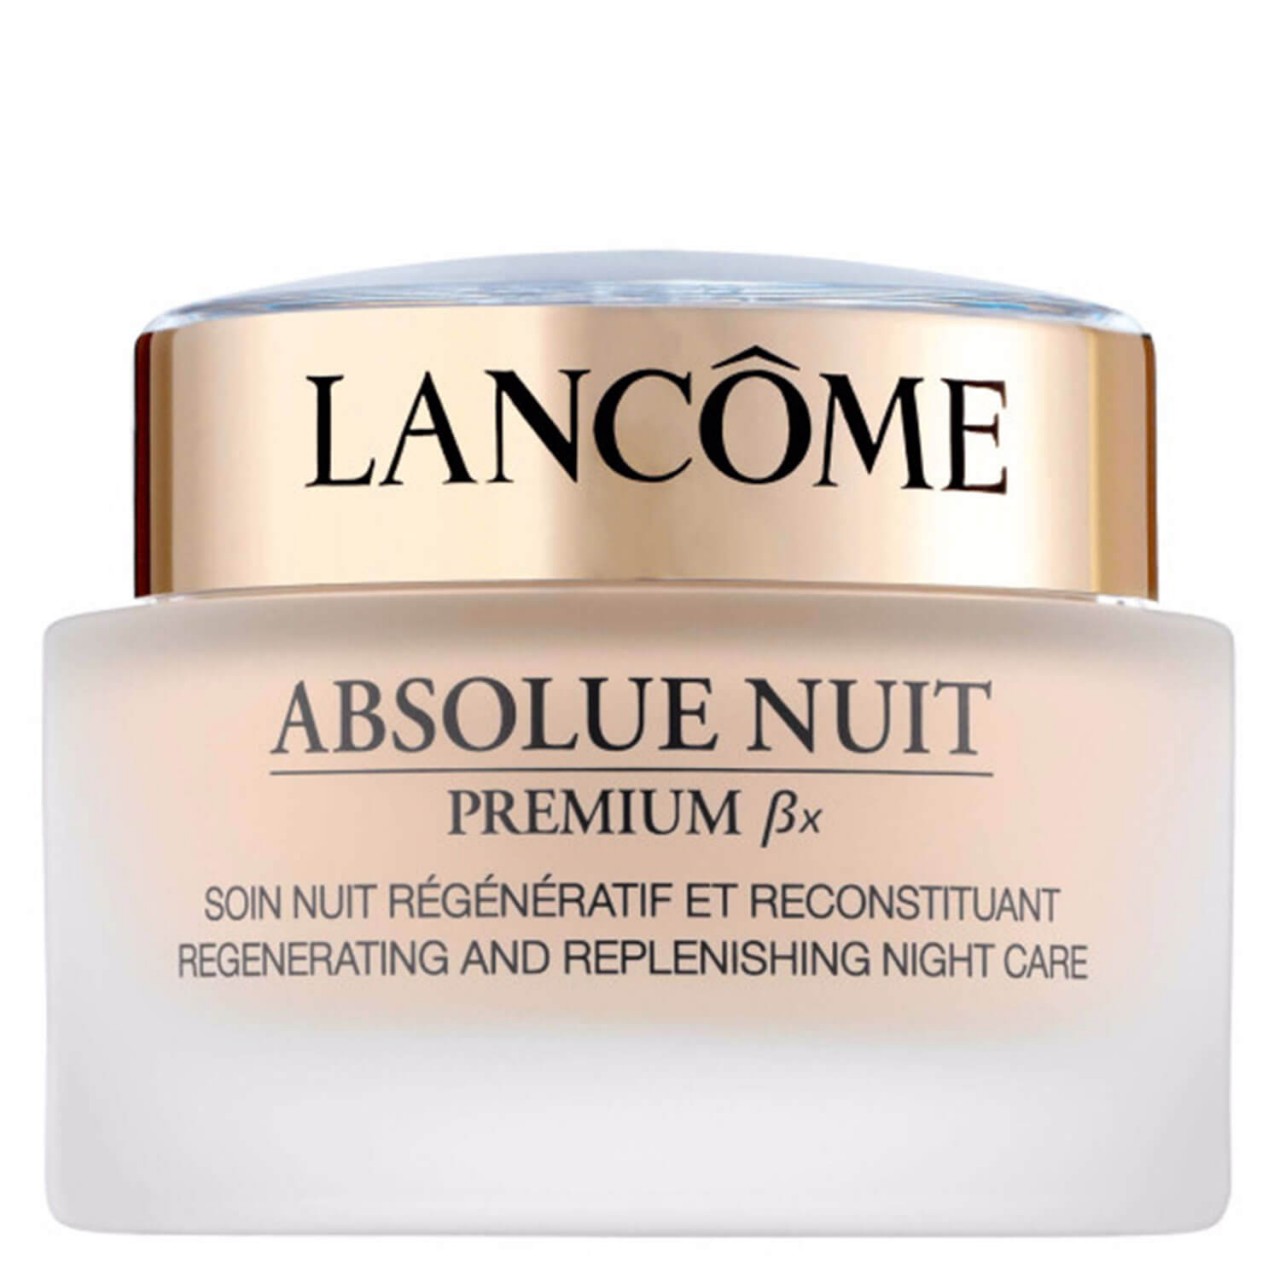 ABSOLUE - Nuit Premium ßx Regenerating and Replenishing Care